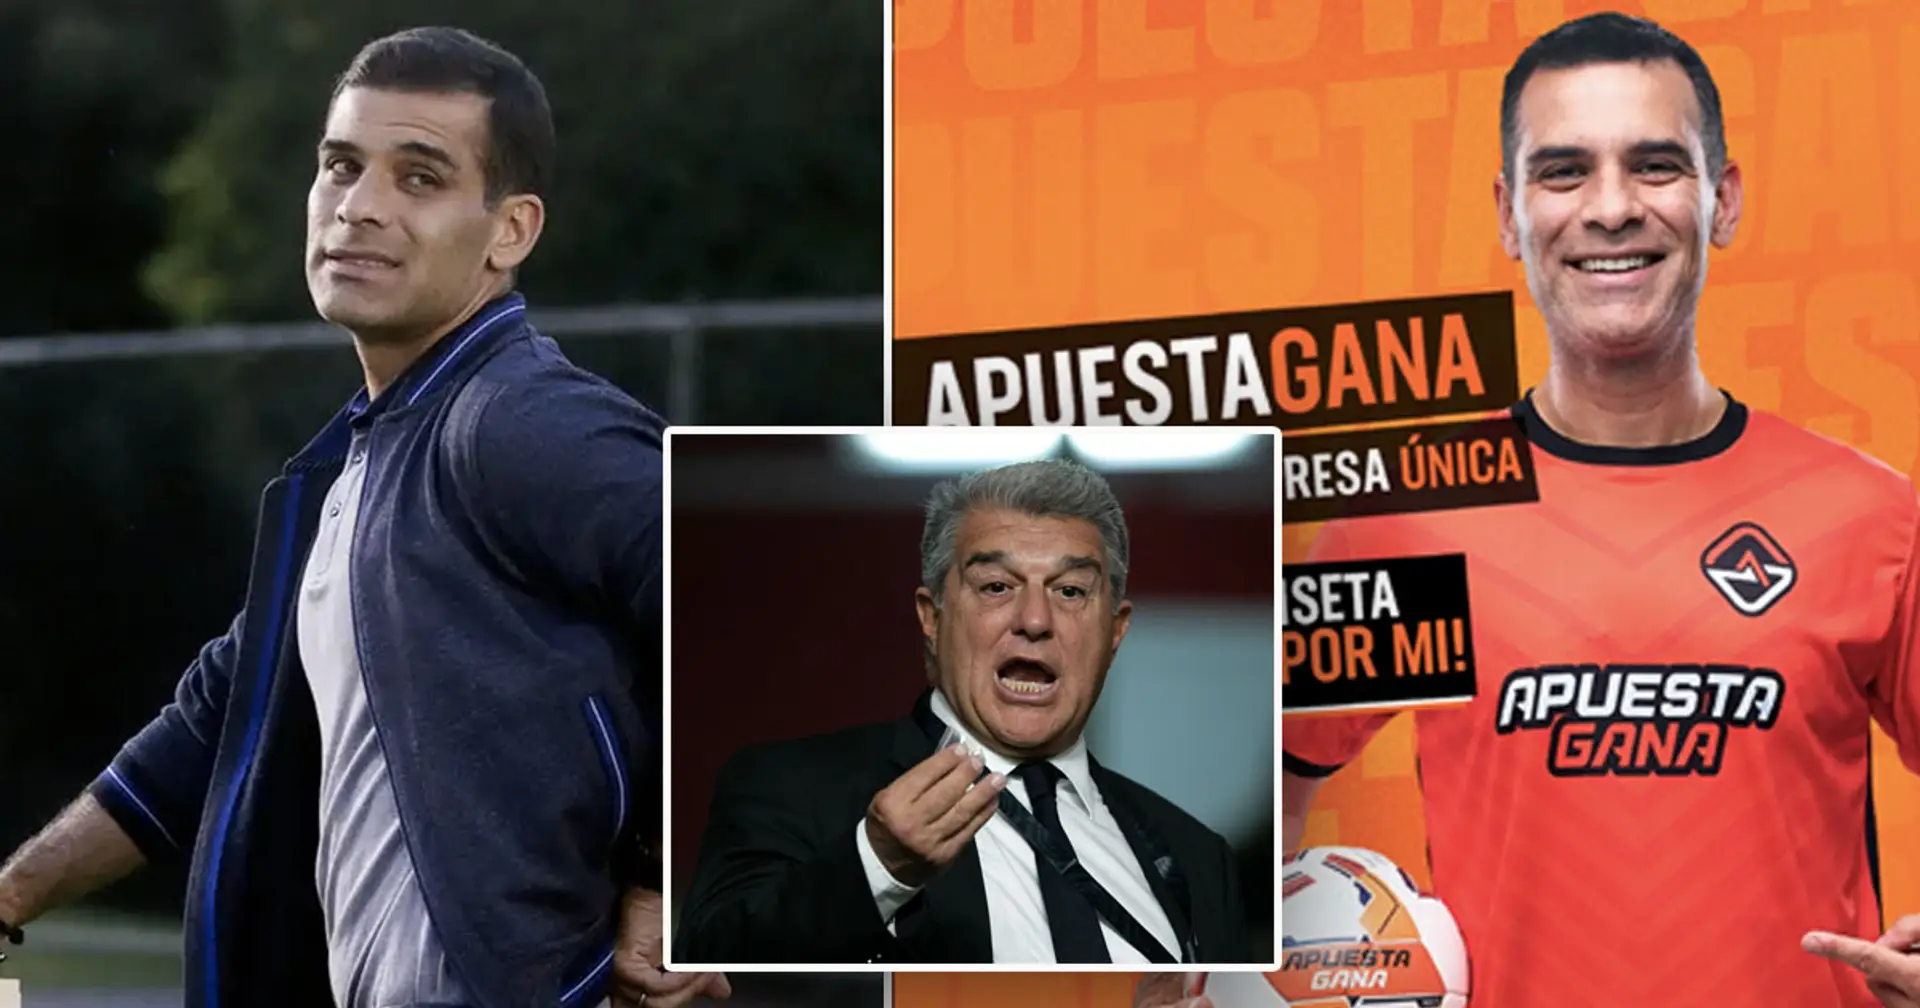 Rafa Marquez's Instagram posts 'infuriate' Barca: board takes matter to club lawyers